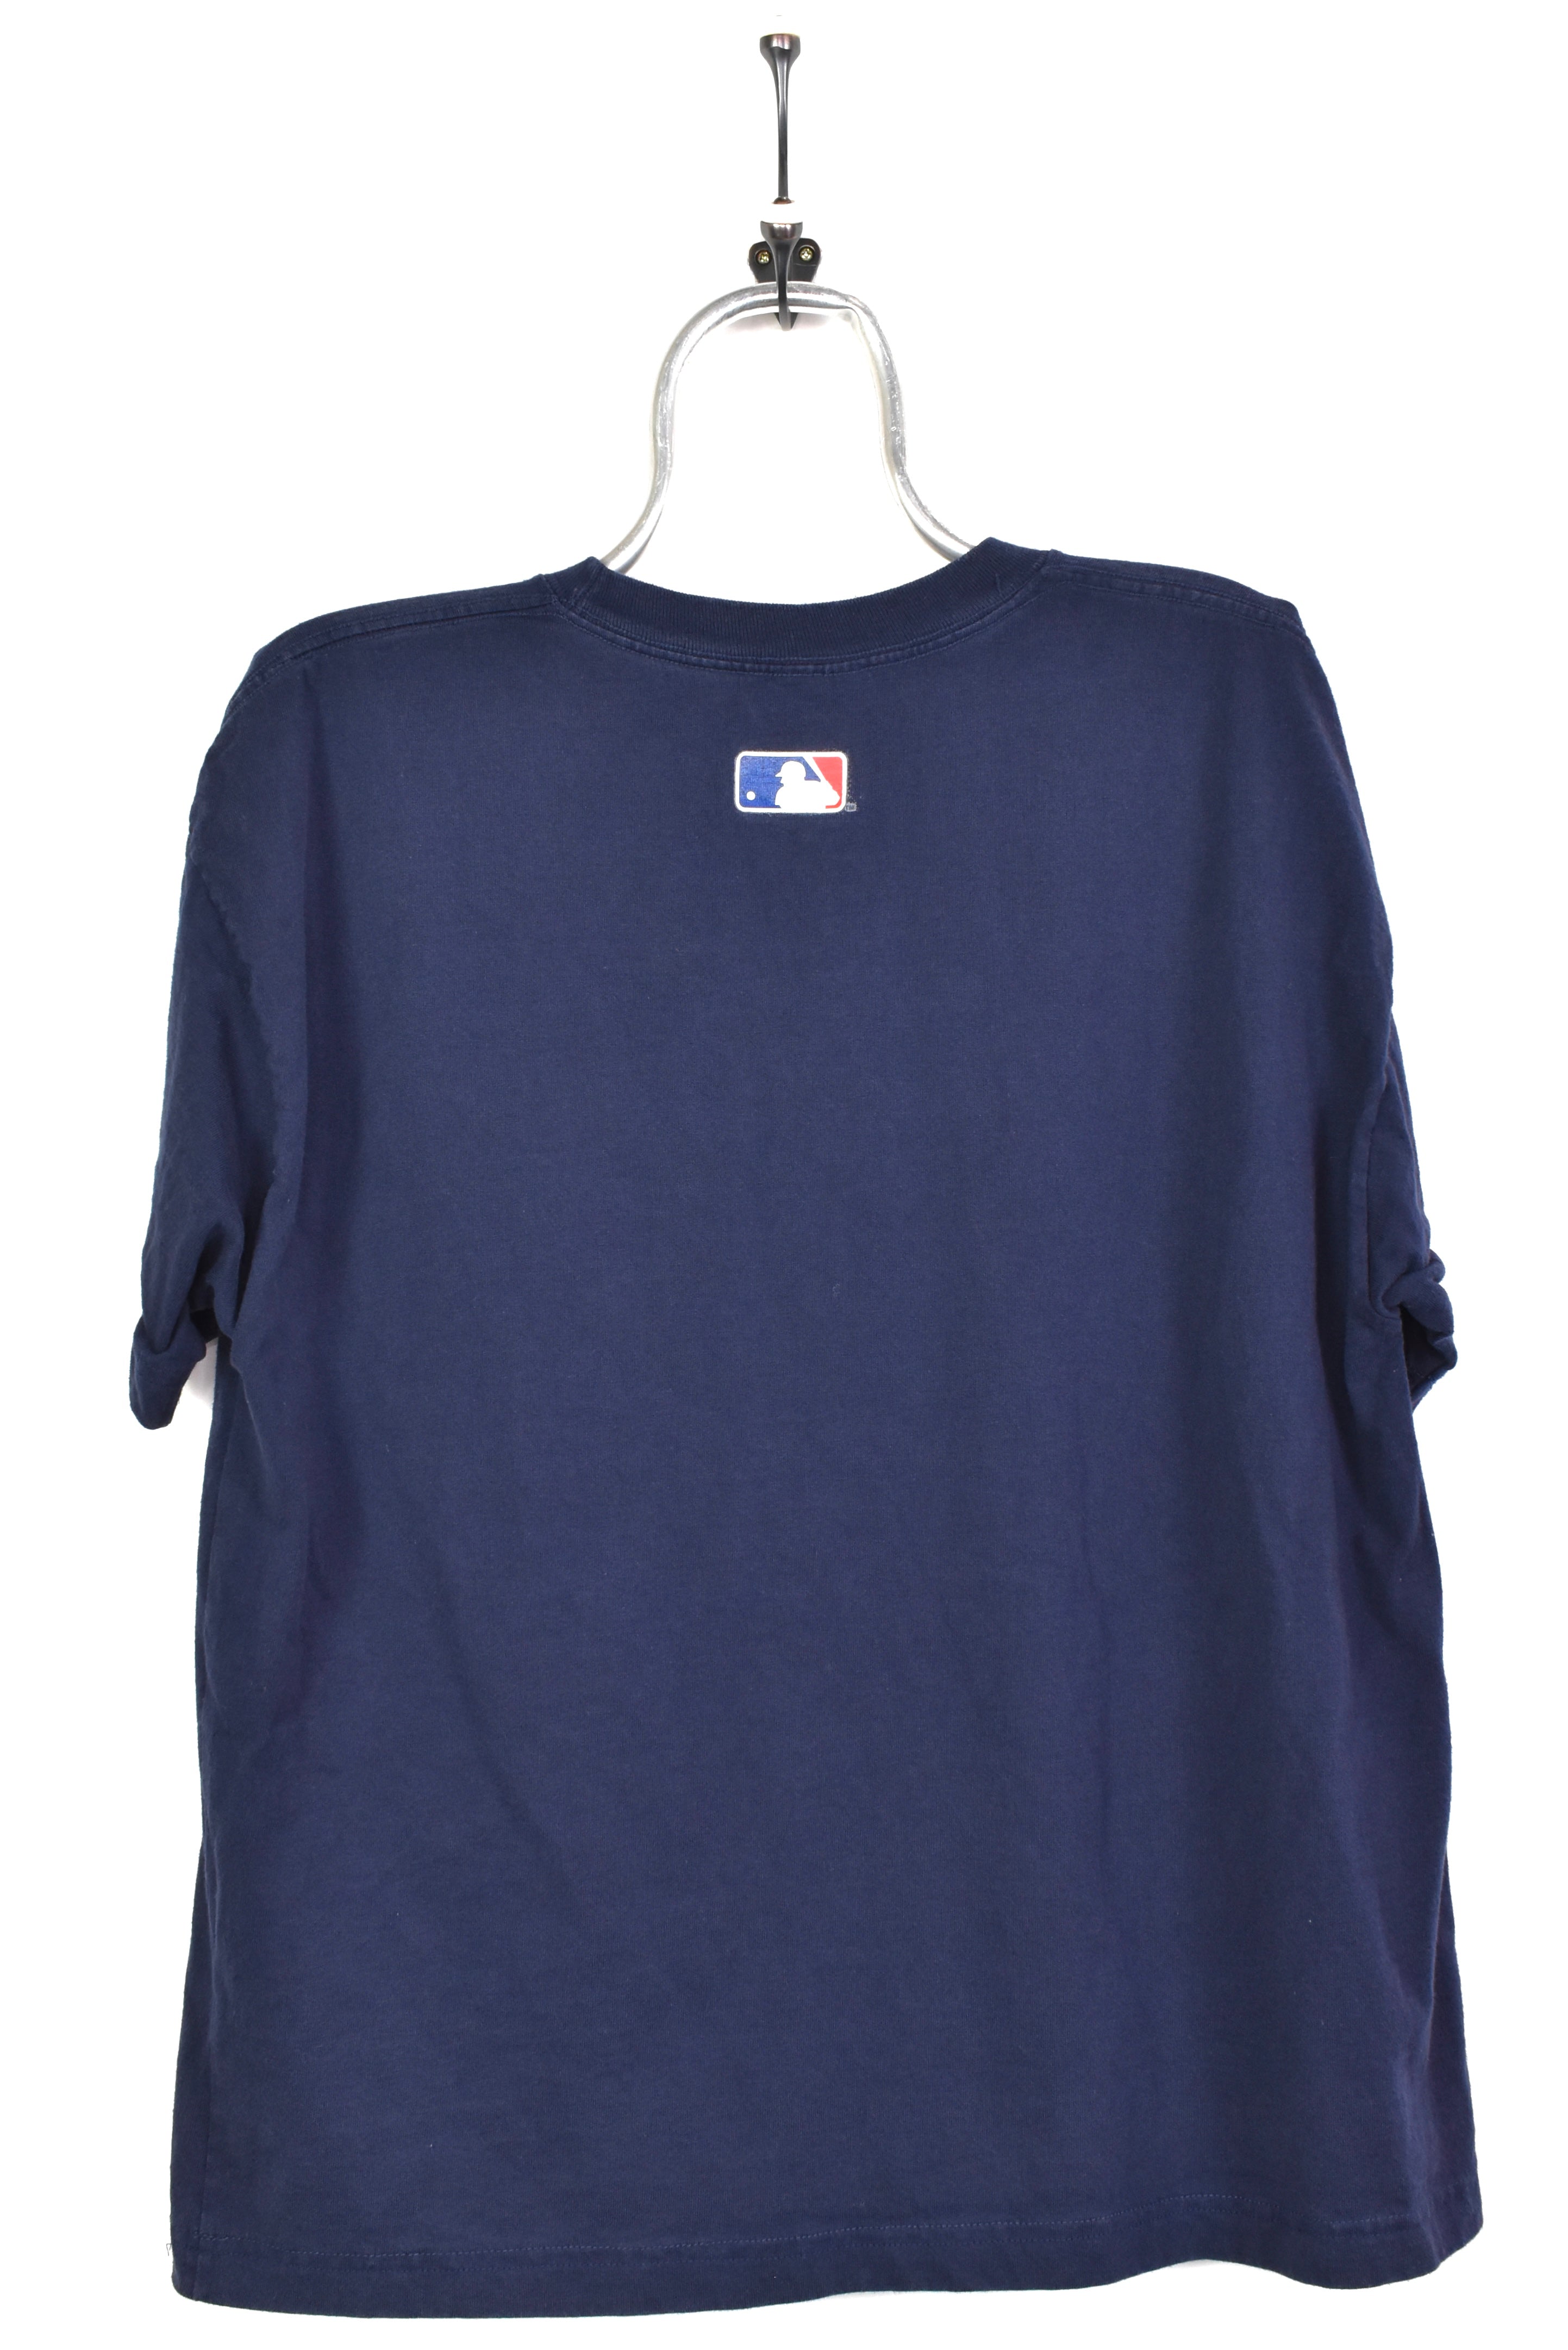 Vintage New York Yankees shirt, MLB navy blue graphic tee - AU L PRO SPORT